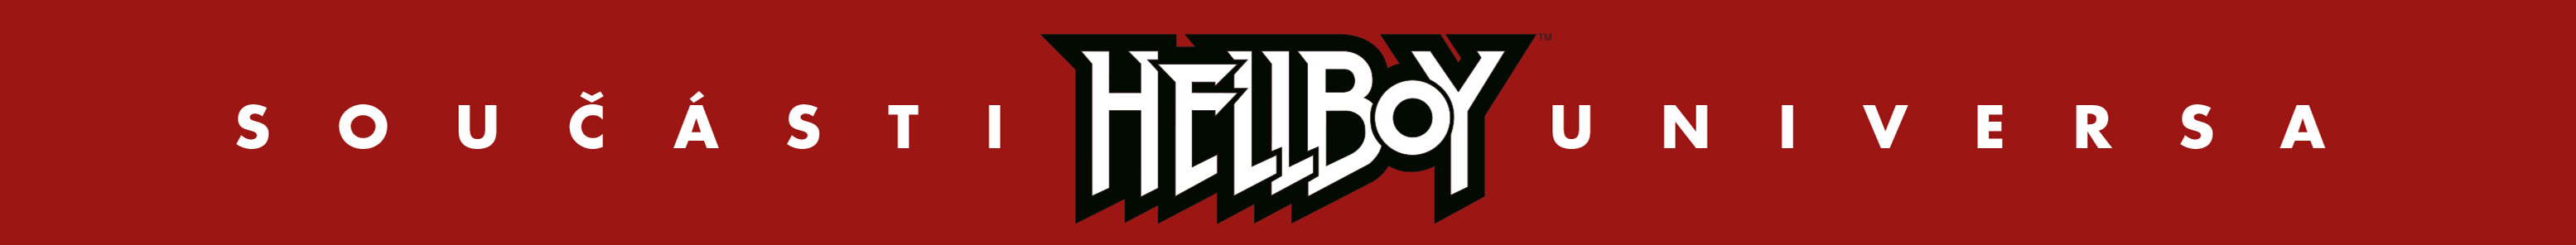 Hellboy Universum